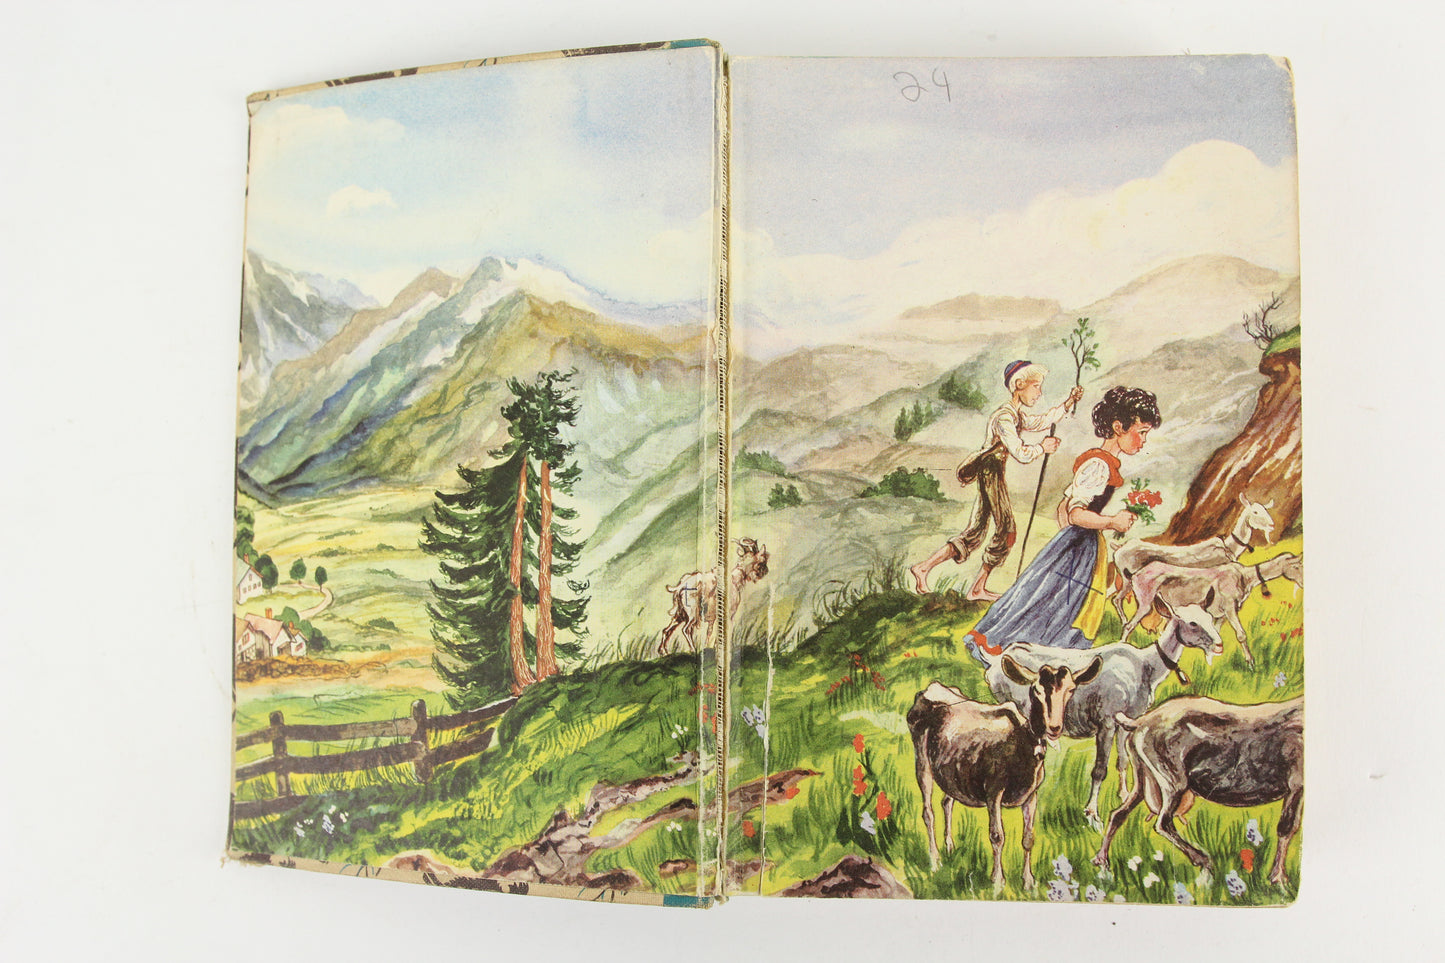 Heidi (Illustrated) by Johanna Spyri, Copyright 1945